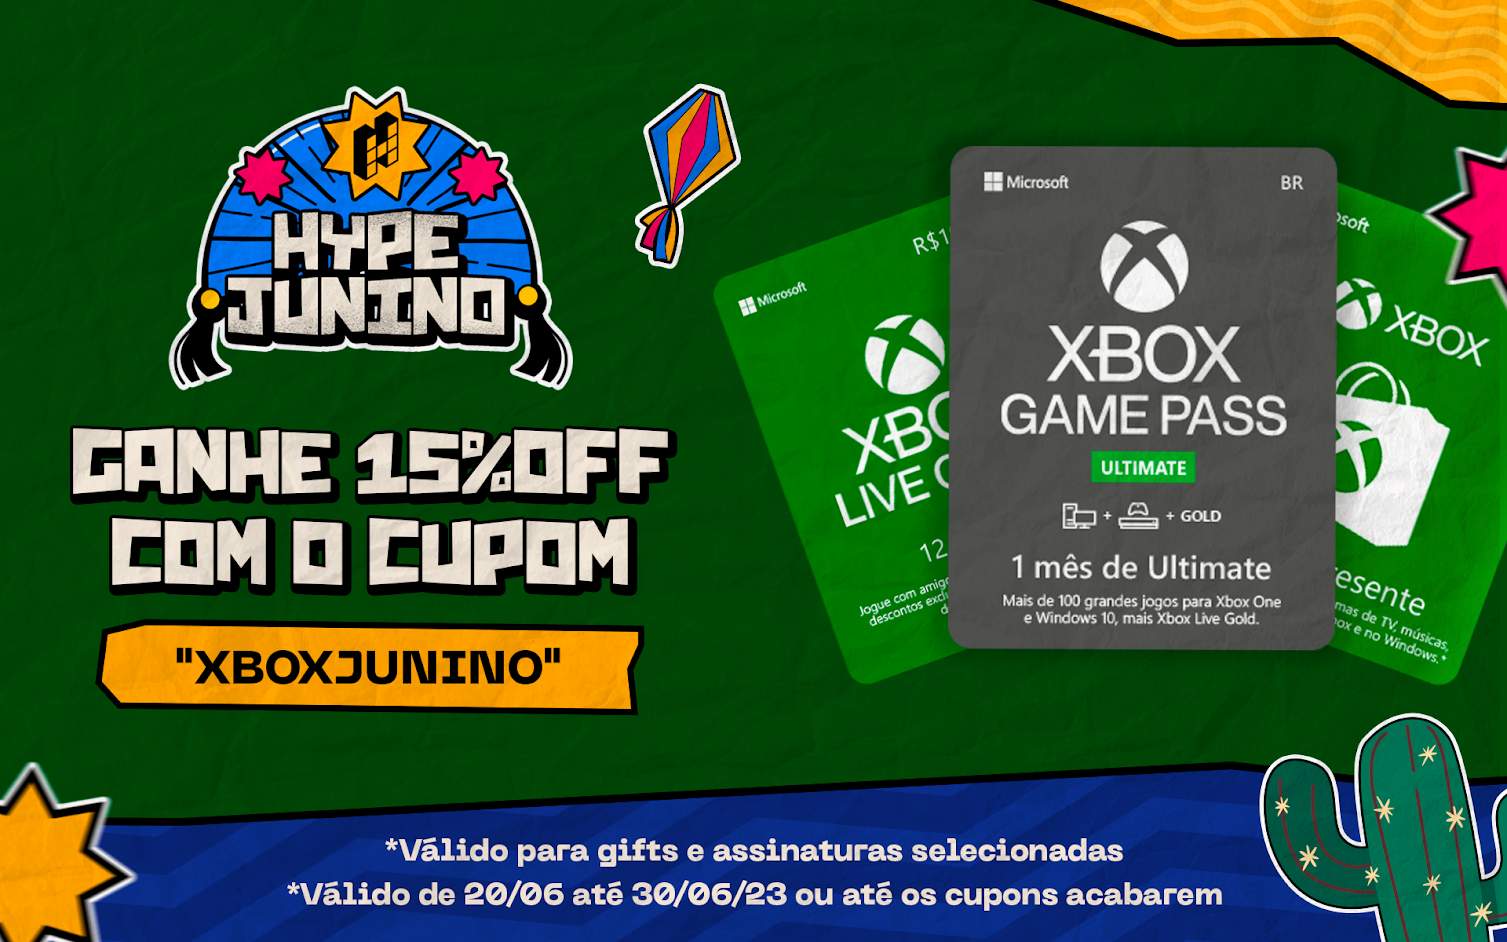 Xbox game pass Ultimate 1 mes – Latin Gamer Shop